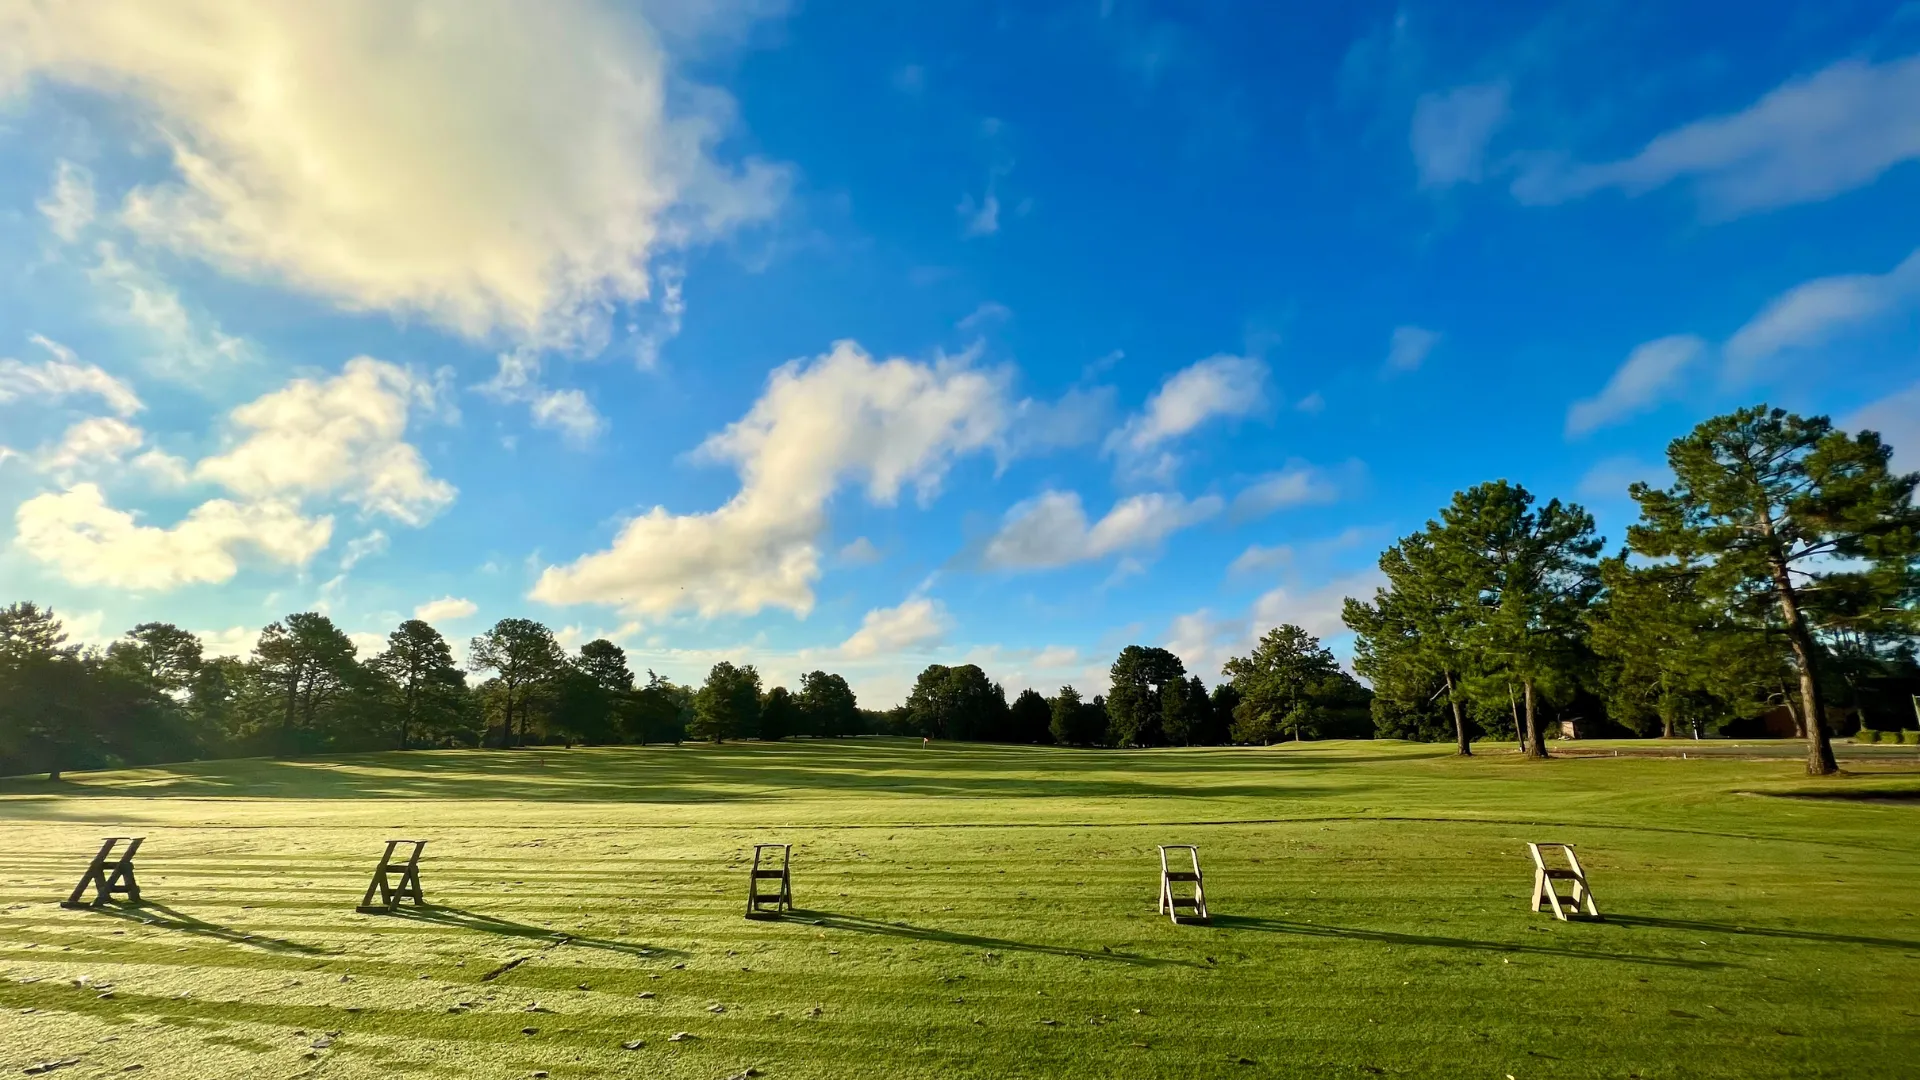 Golf Practice Facilities in Richmond, VA Meadowbrook Country Club